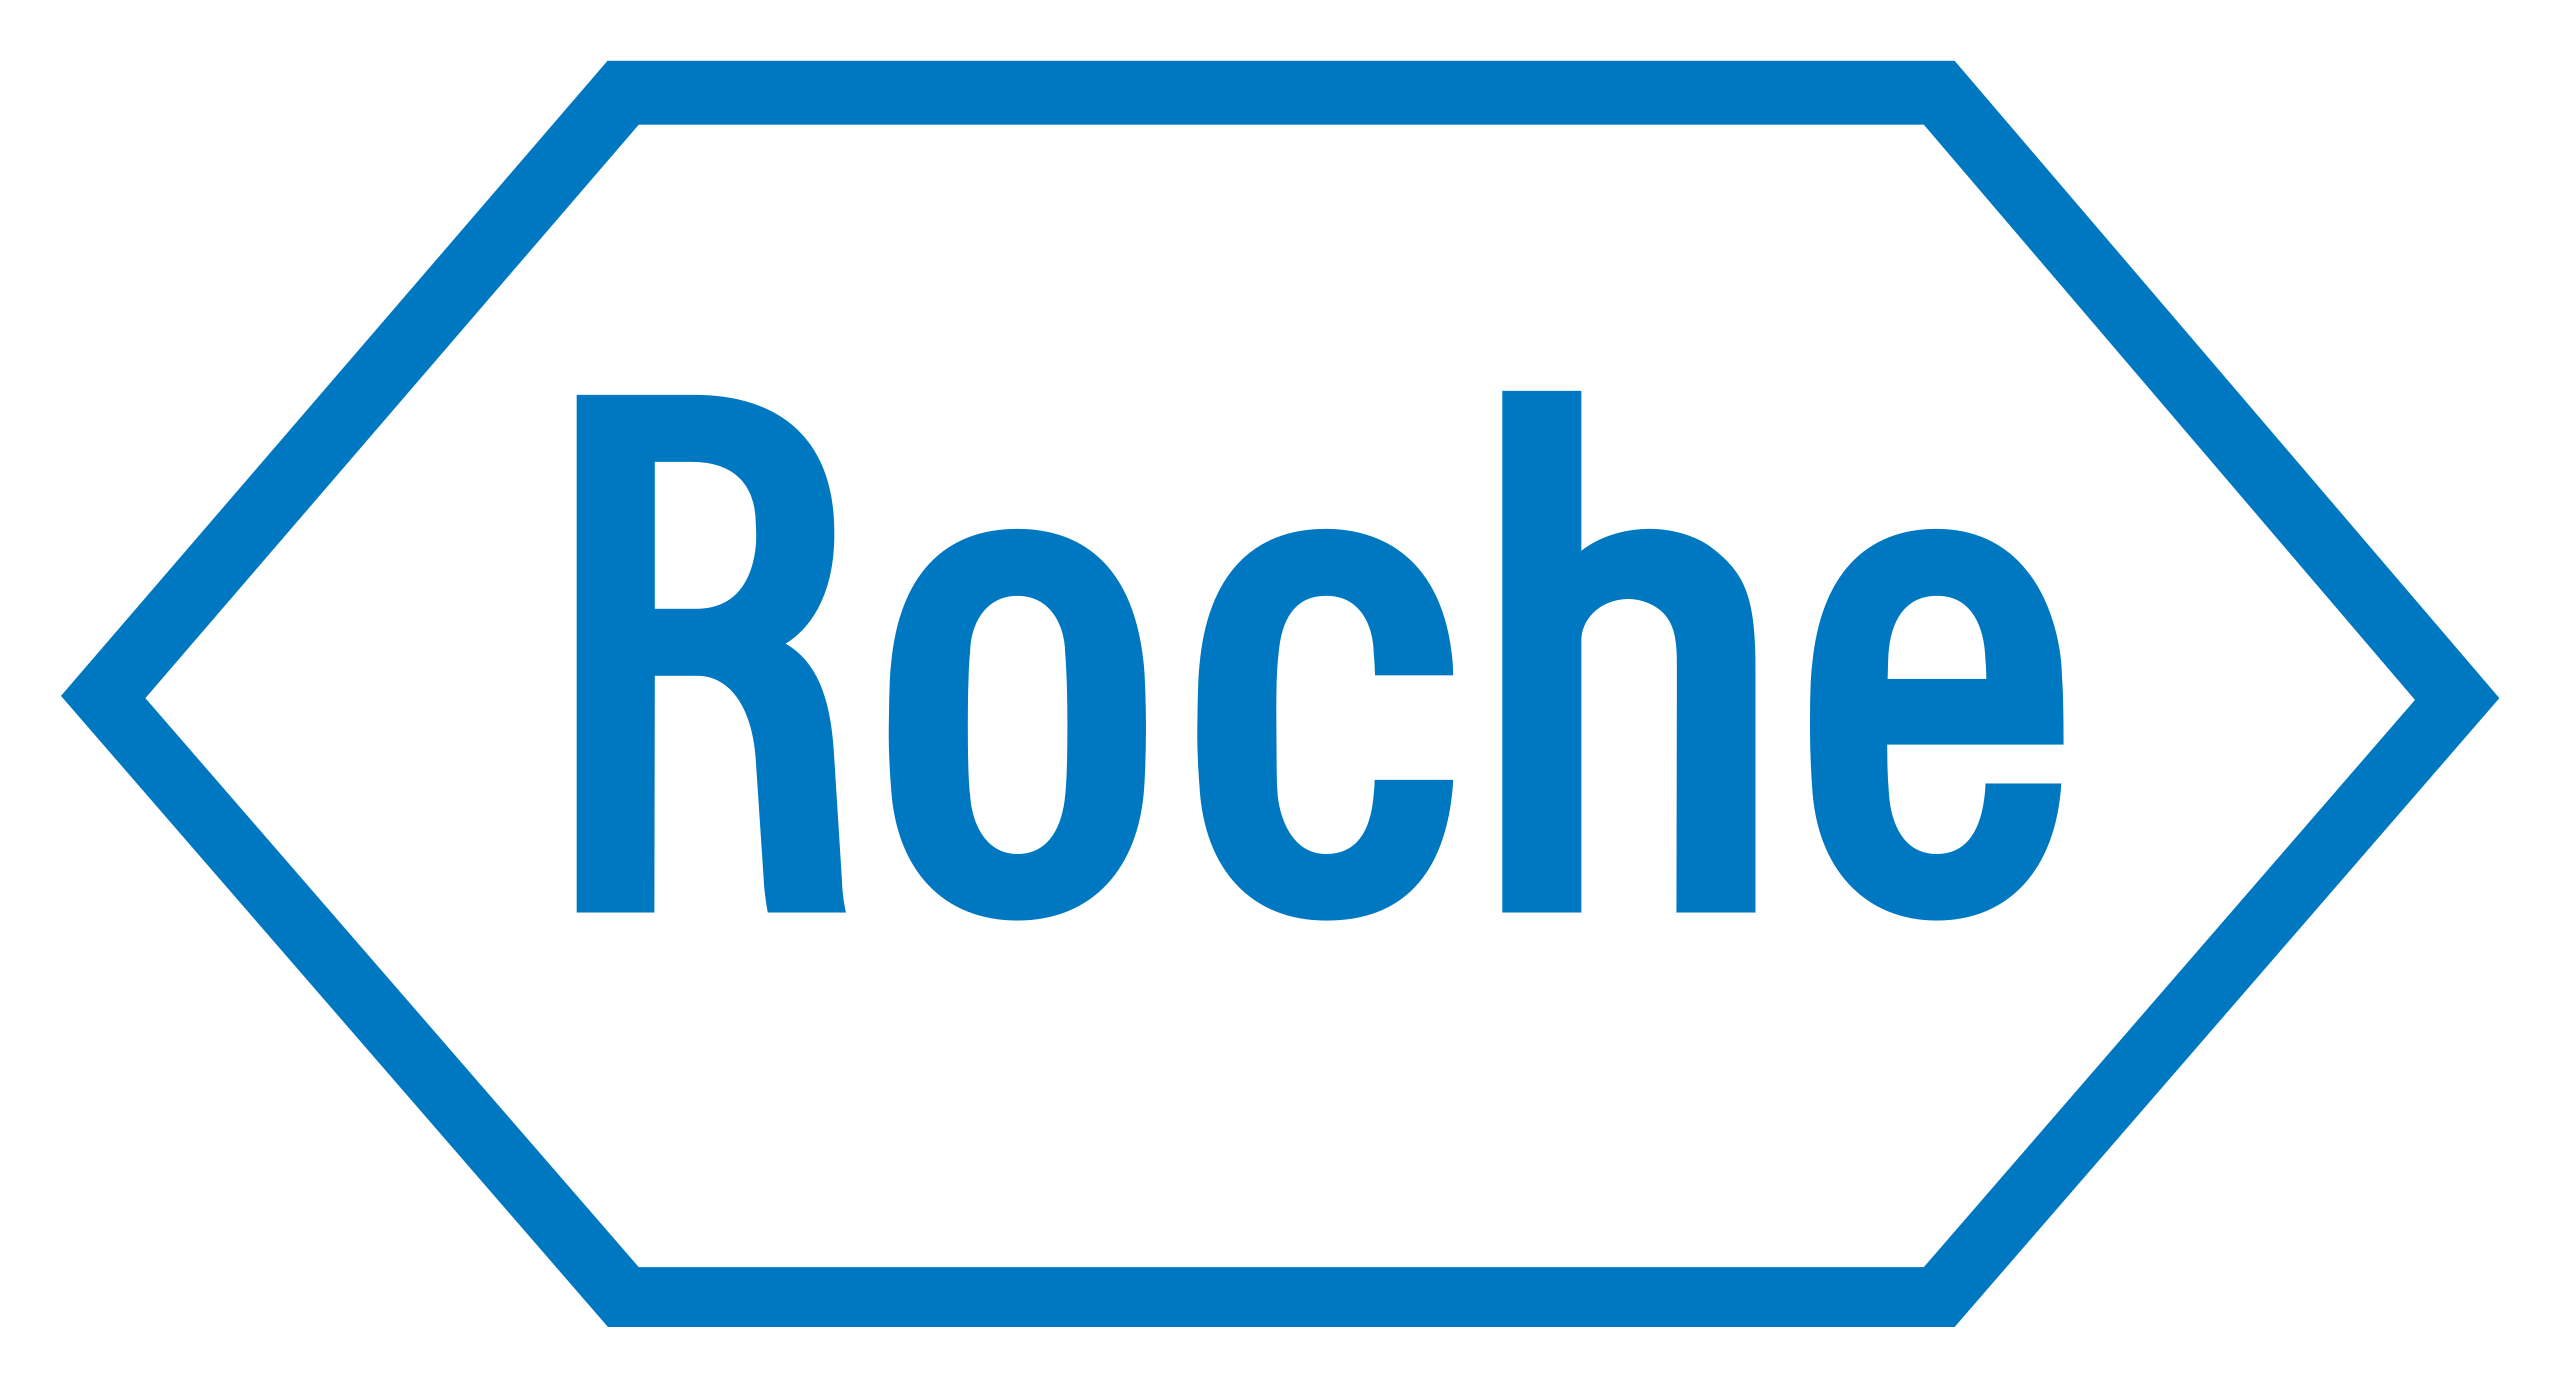 The logo of Roche